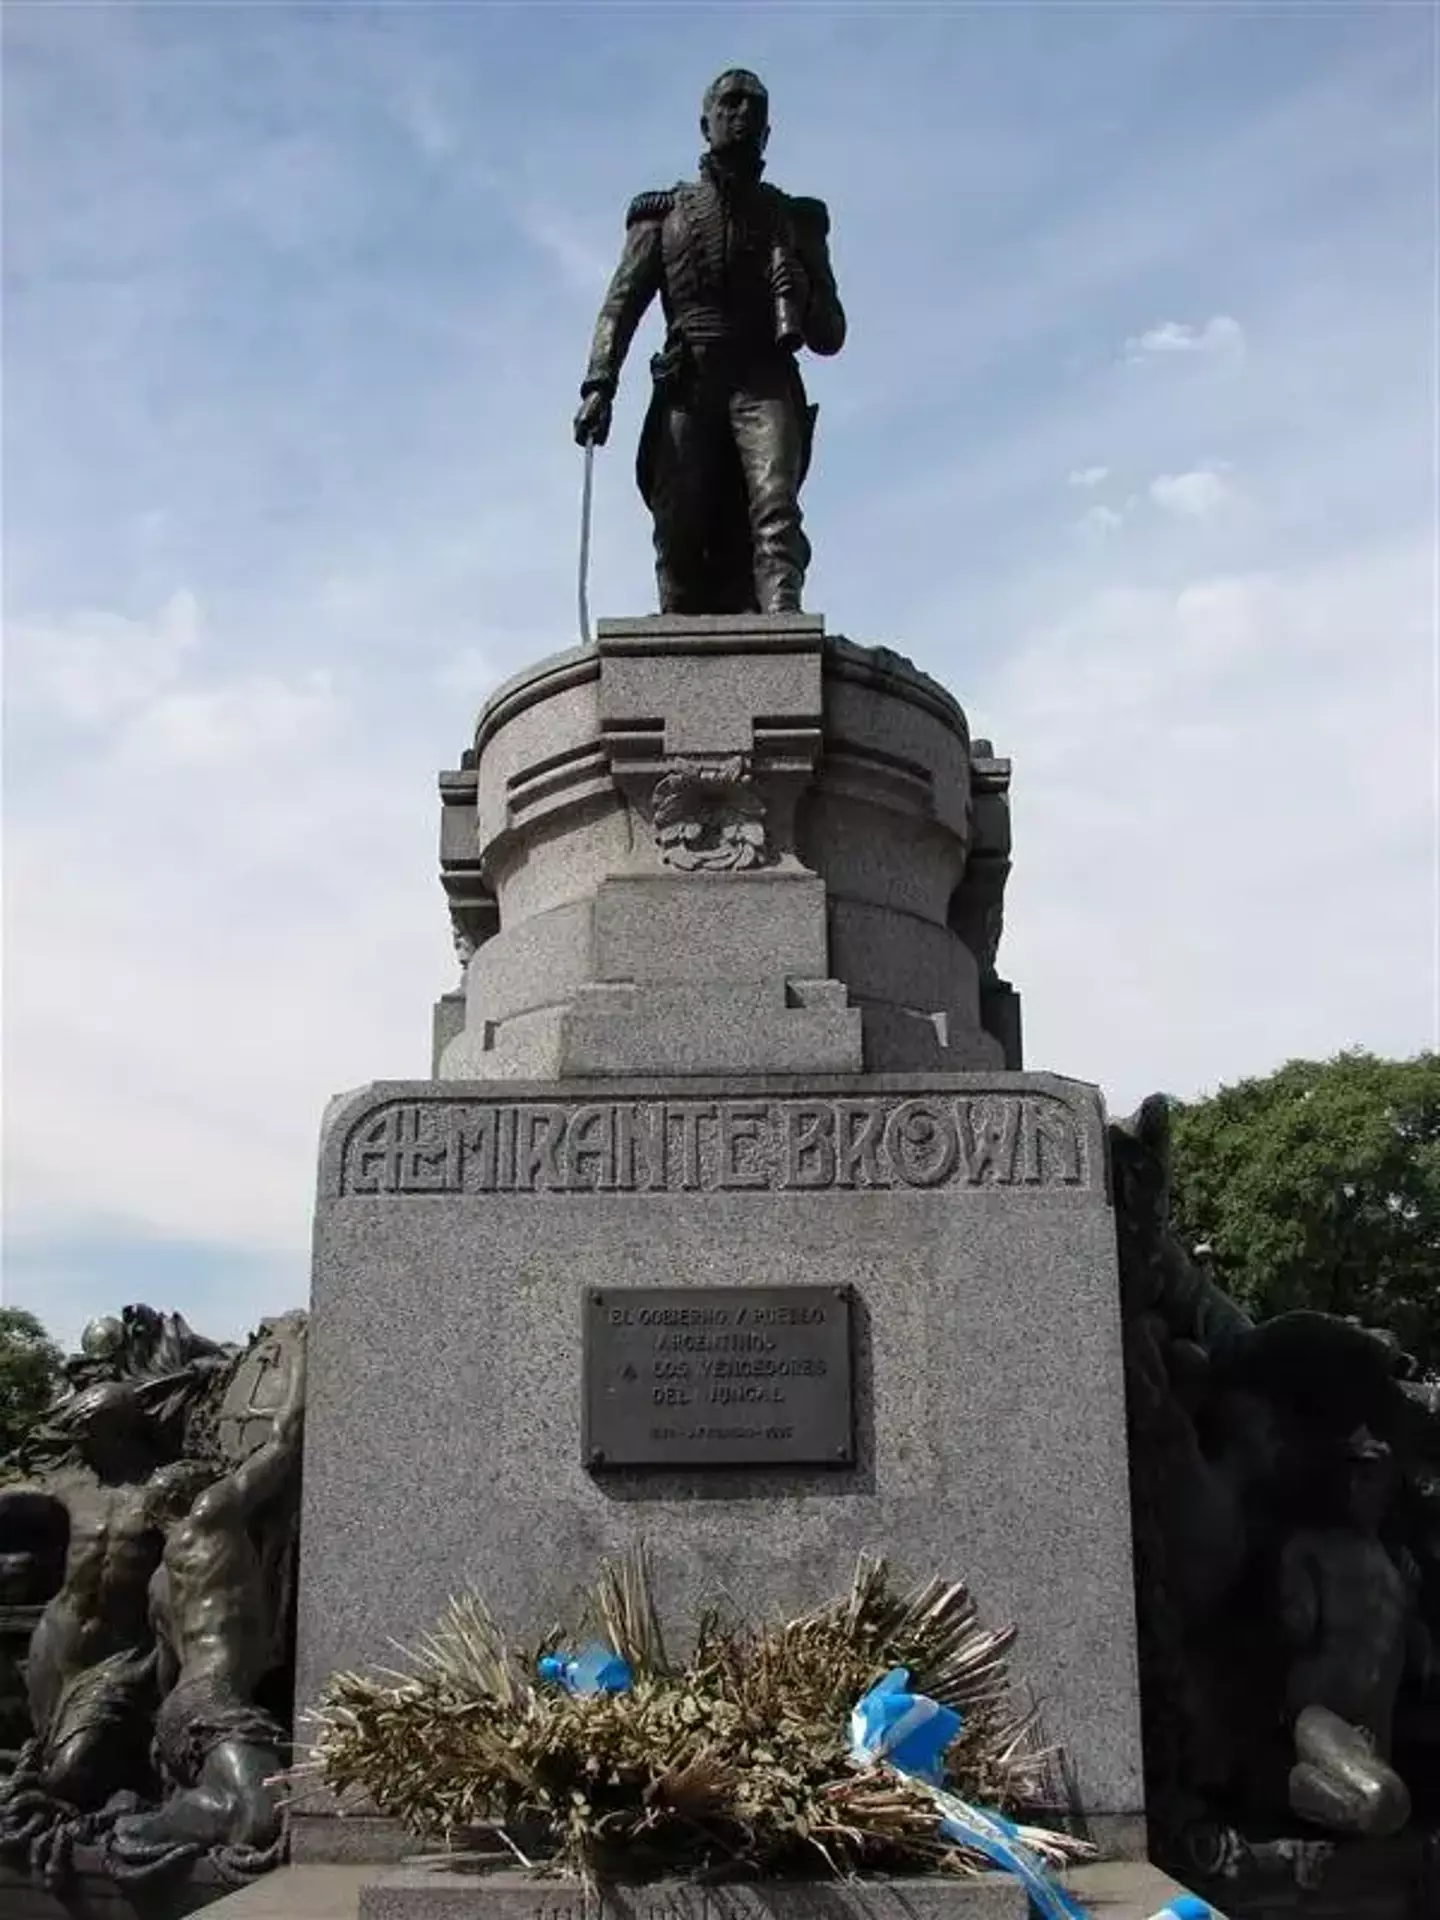 Statue of “Admirante Brown” in Argentina